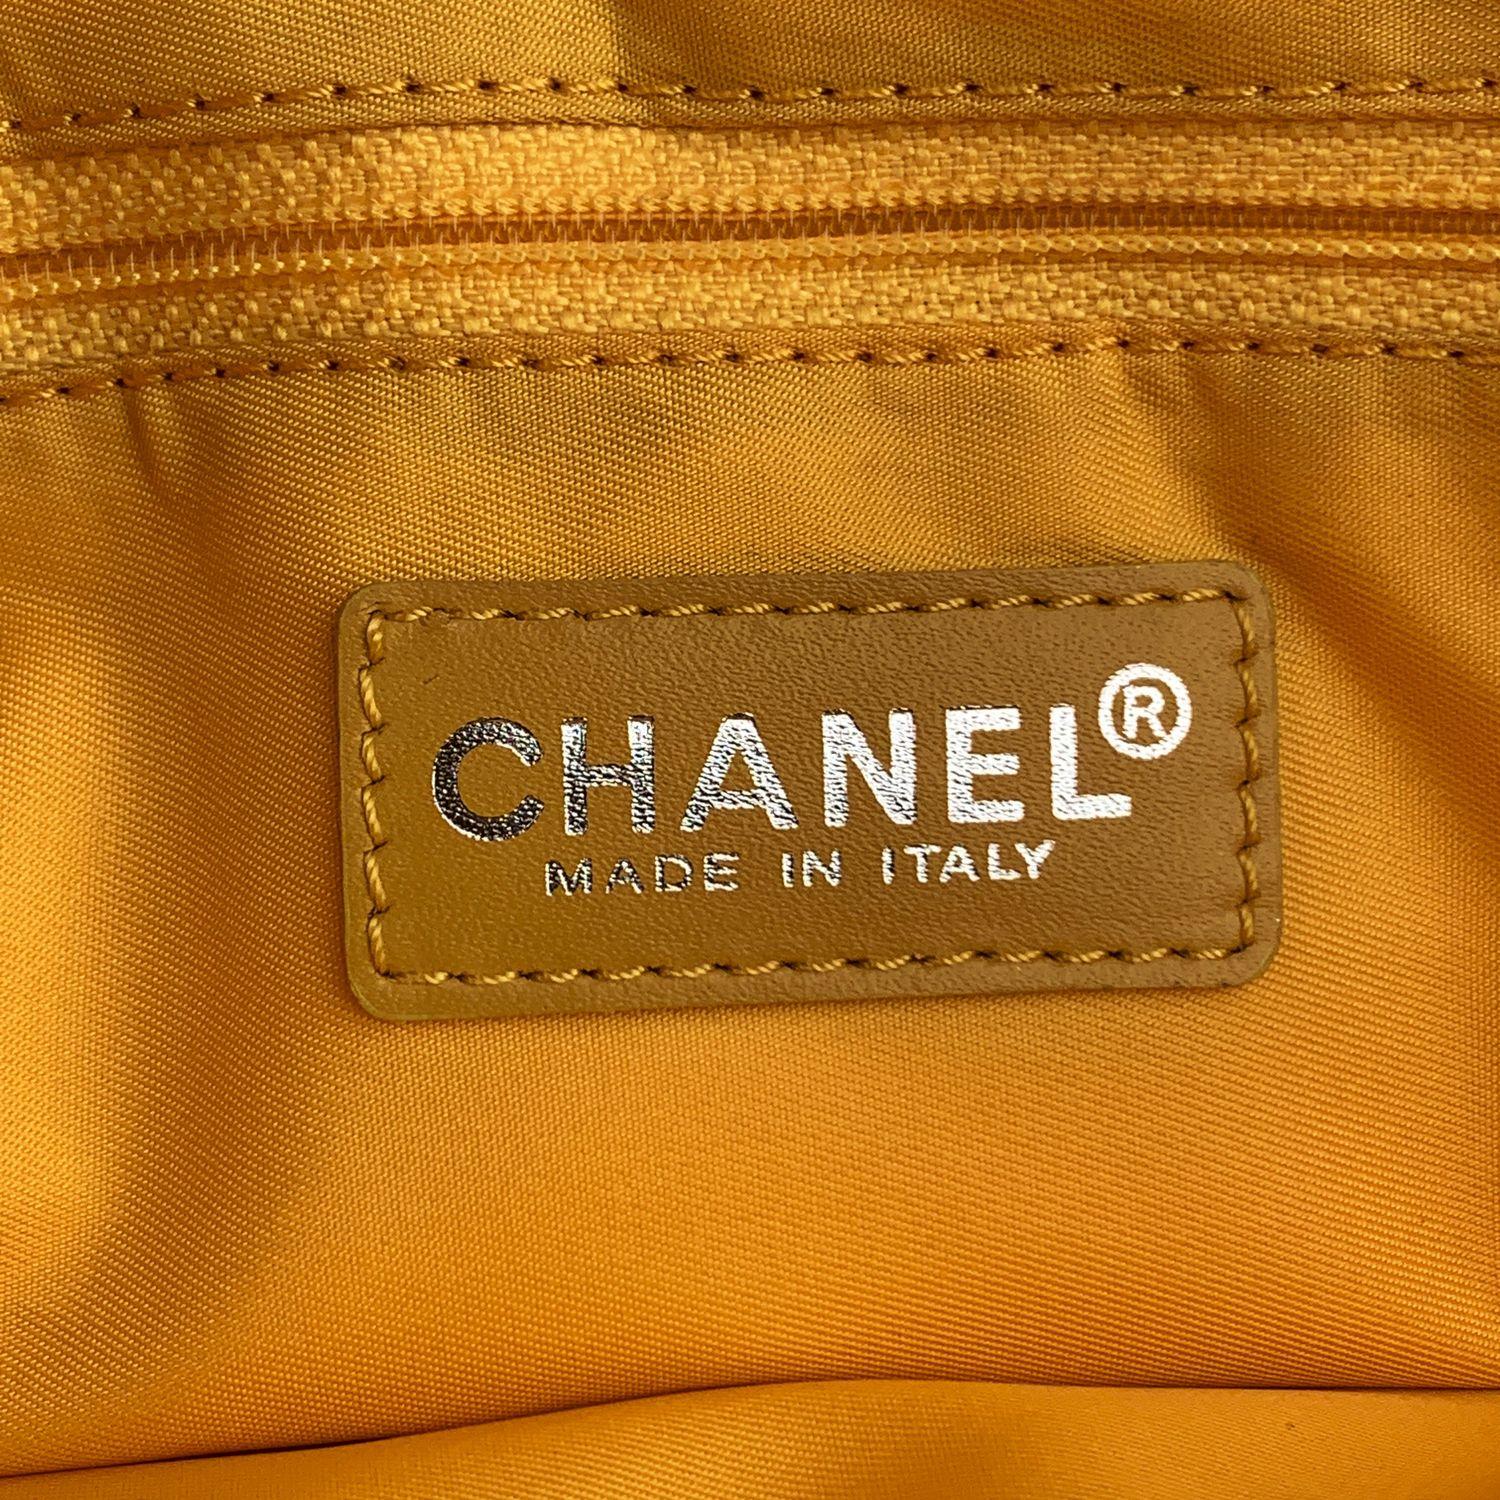 Chanel Yellow Nylon Canvas Travel Line Tote Bag Handbag 1